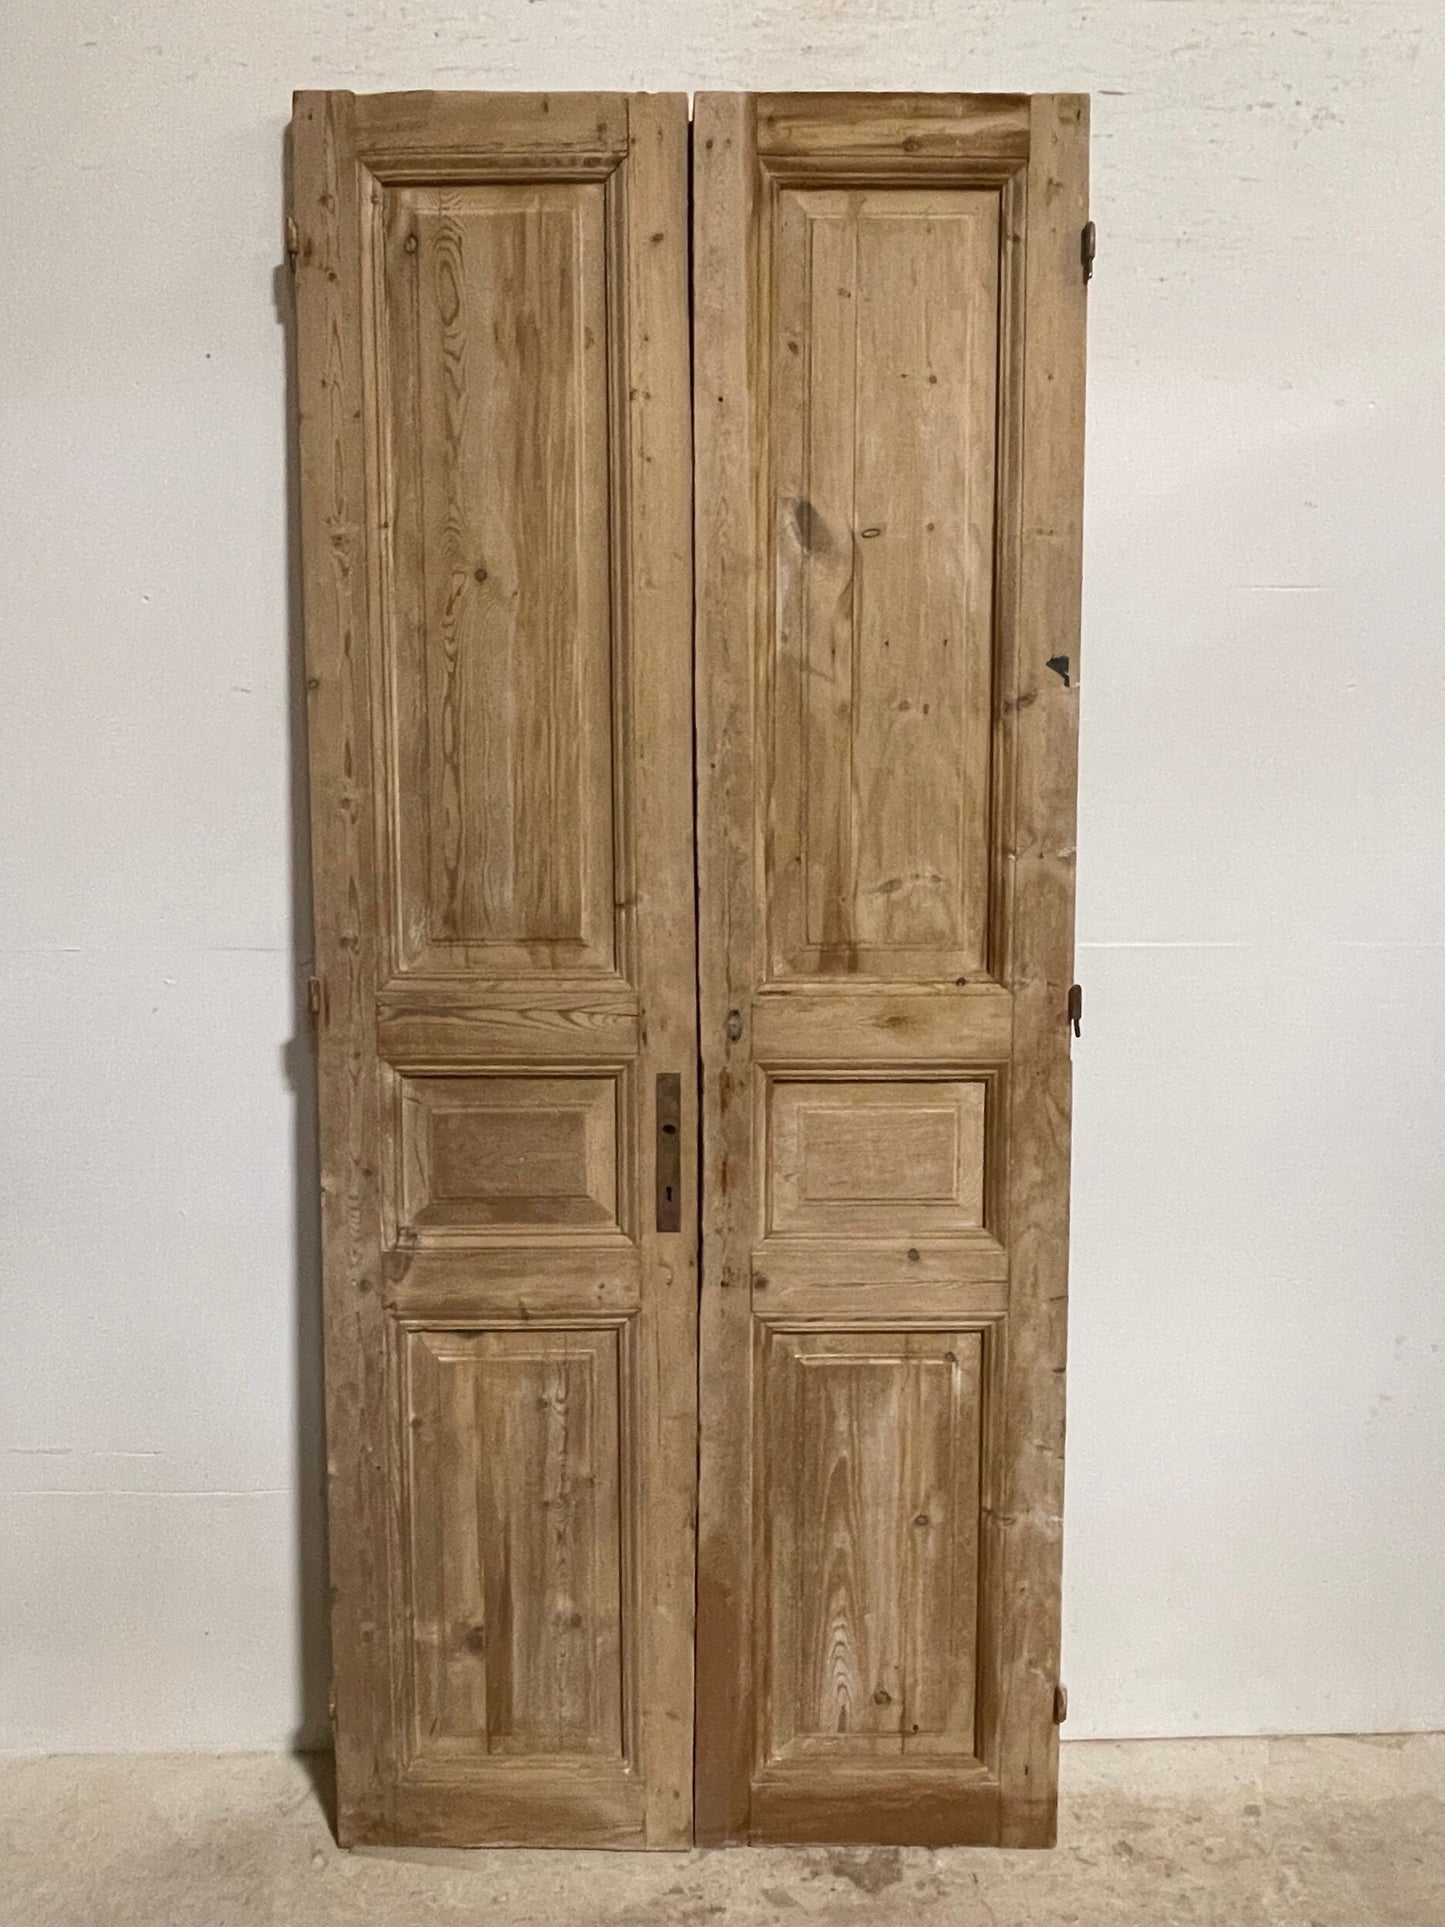 Antique French panel doors (90.5x38.75) I124